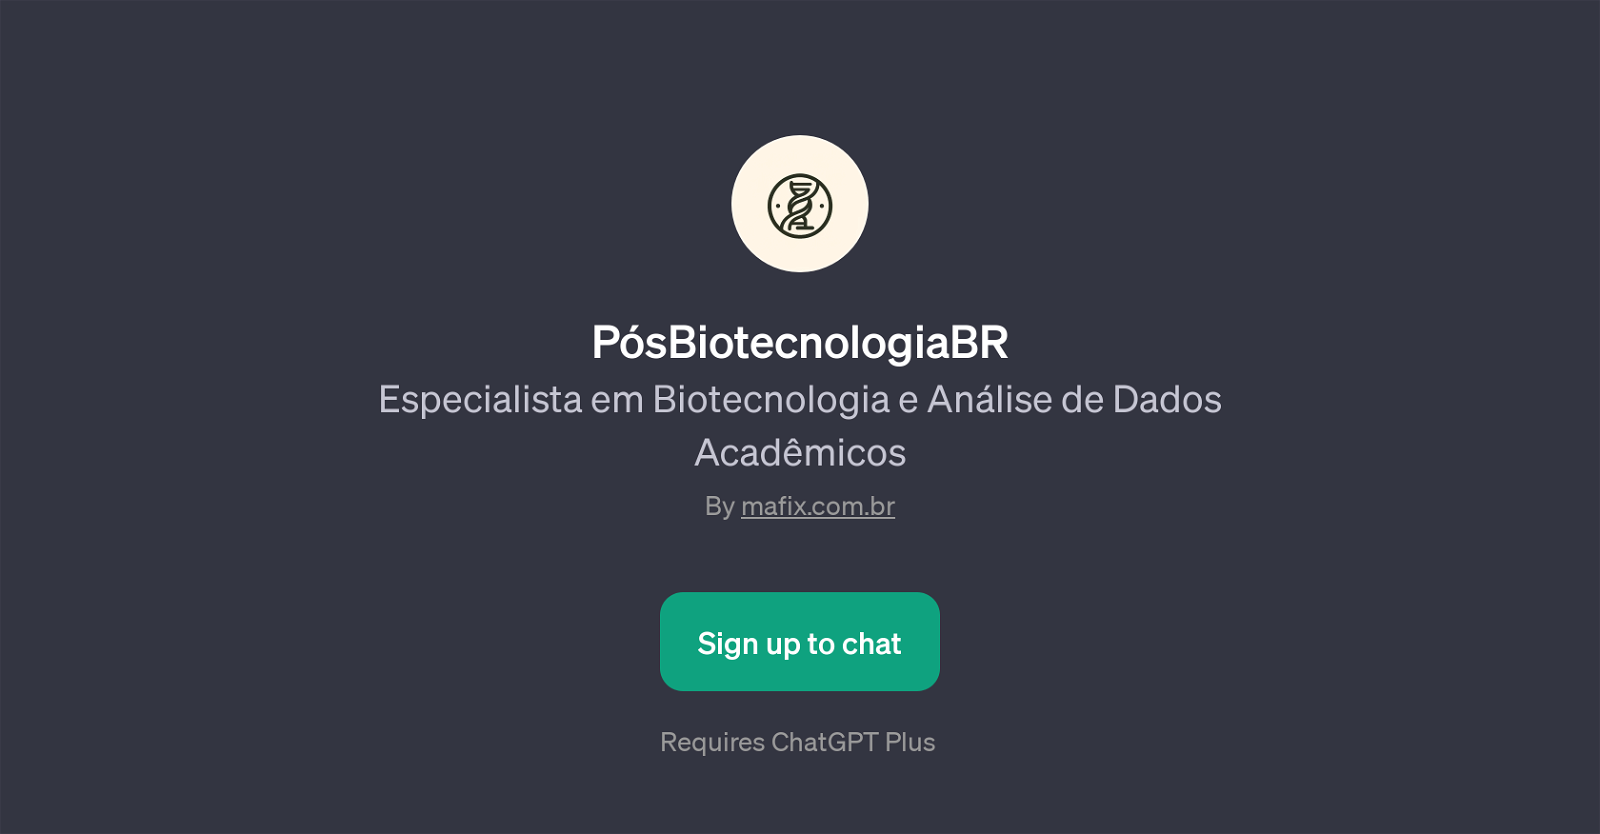 PsBiotecnologiaBR website